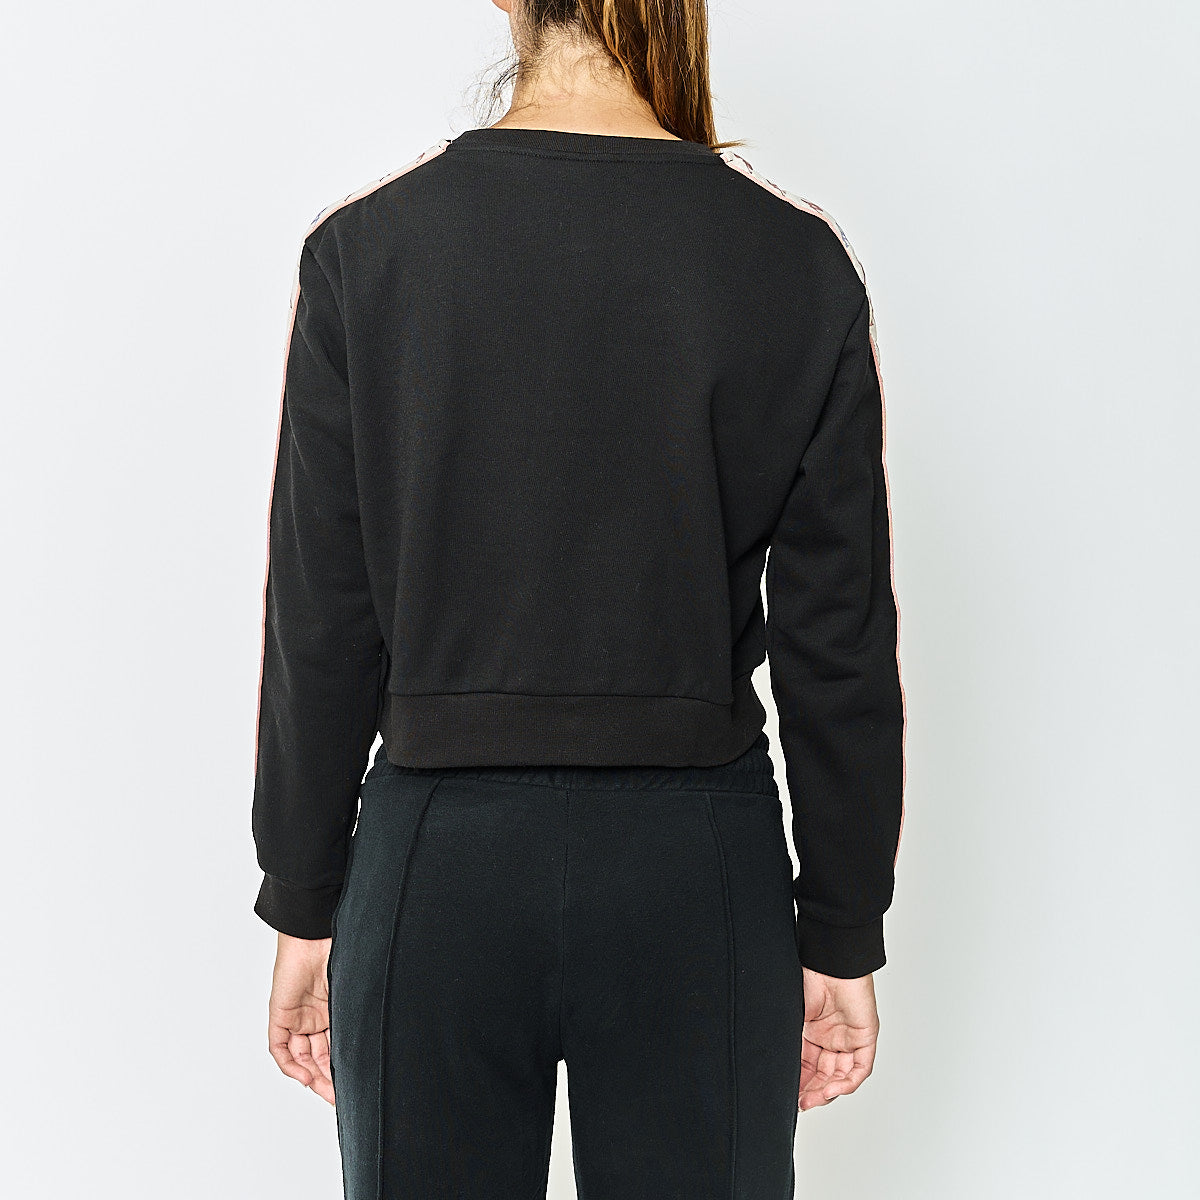 Sweatshirt Femme Famisho Authentic Noir